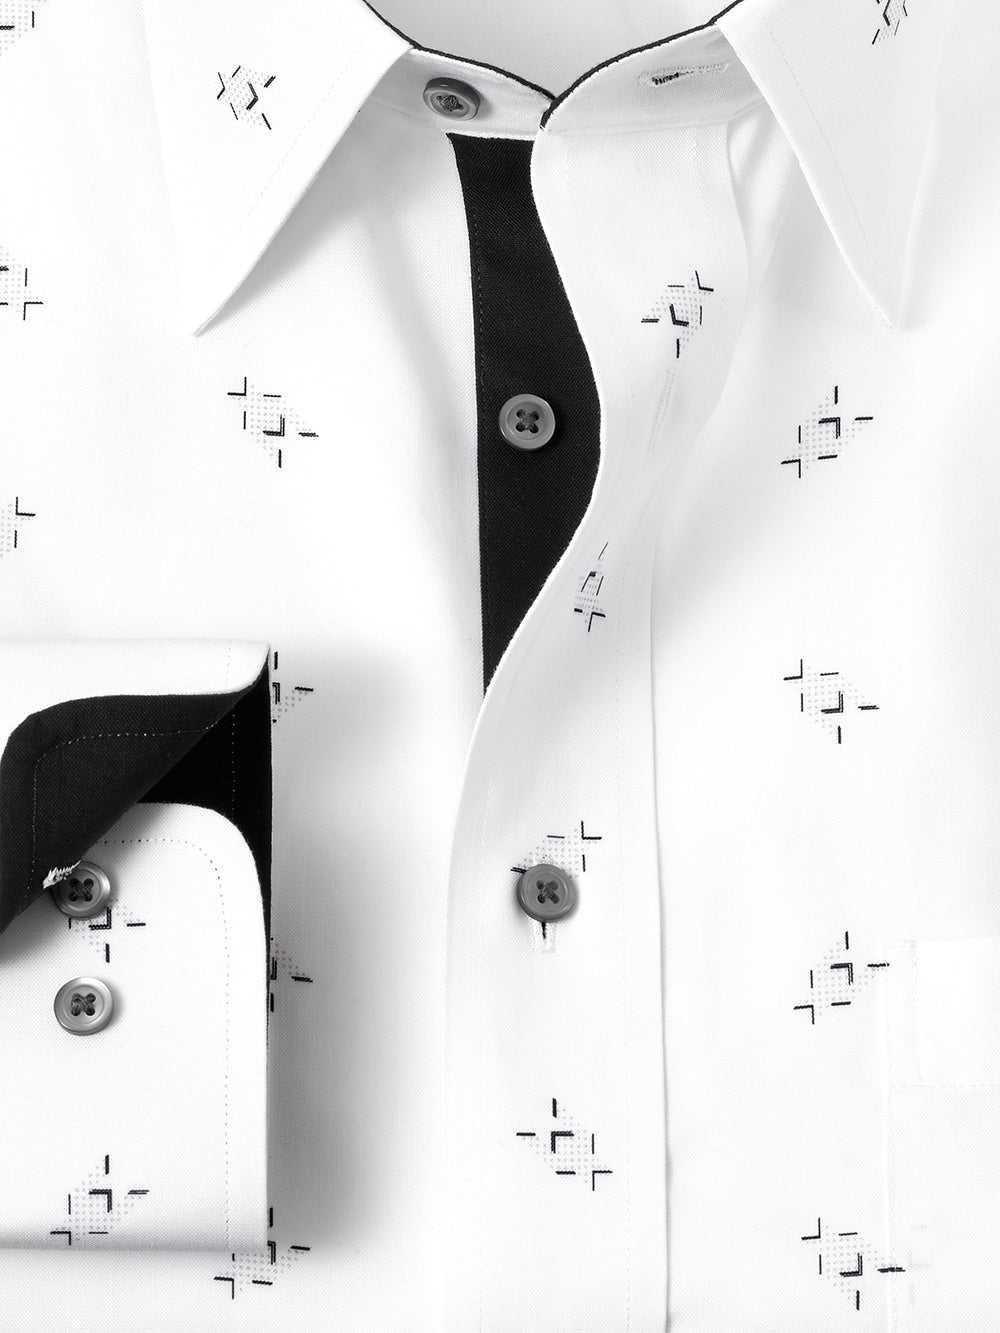 Paul Fredrick, Non-iron Cotton Houndstooth Print Dress Shirt With Contrast Trim